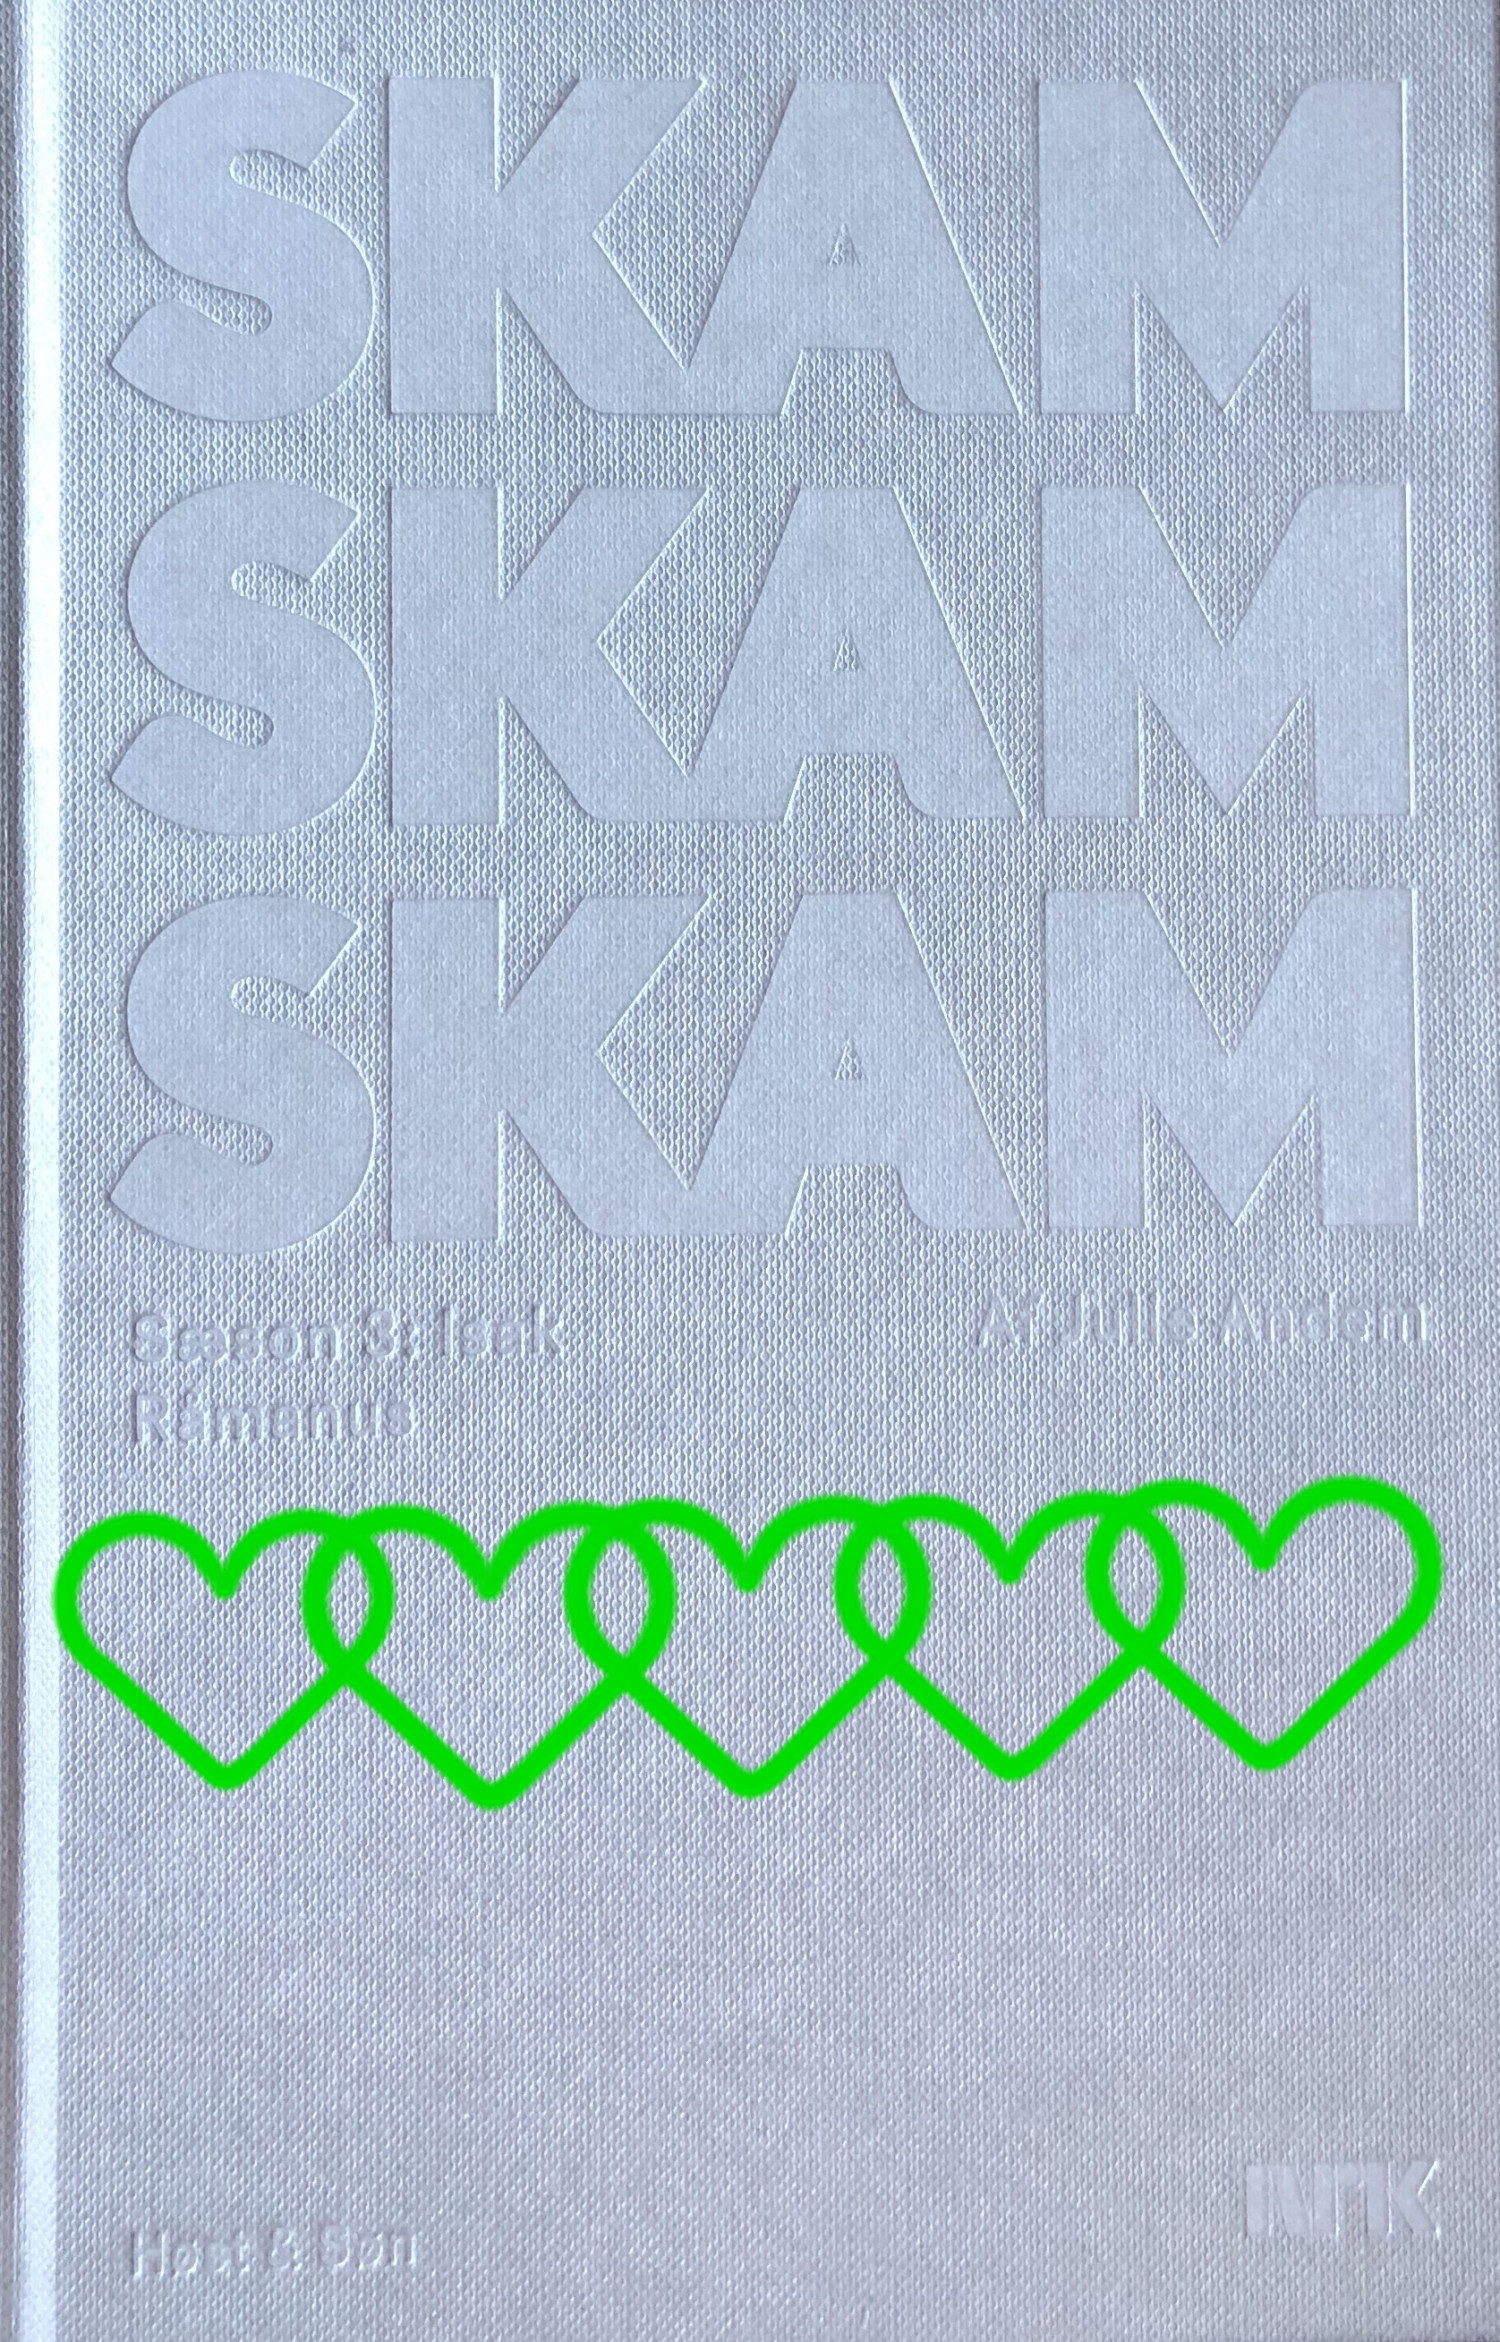 SKAM, Skam sæson 3, Skam Isak sin sesong, SKAM Isak, Isak & Even, Krummeskrummelurer, Krummeskrummelurer.dk, Krummes Krummelurer, Boganmeldelse, Anmeldelse, Anmeldereksemplar, Krumme anbefaler, Julie Andem, Høst & Søn, Rosinante & Co., NRK, SKAM bog, SKAM bok, 